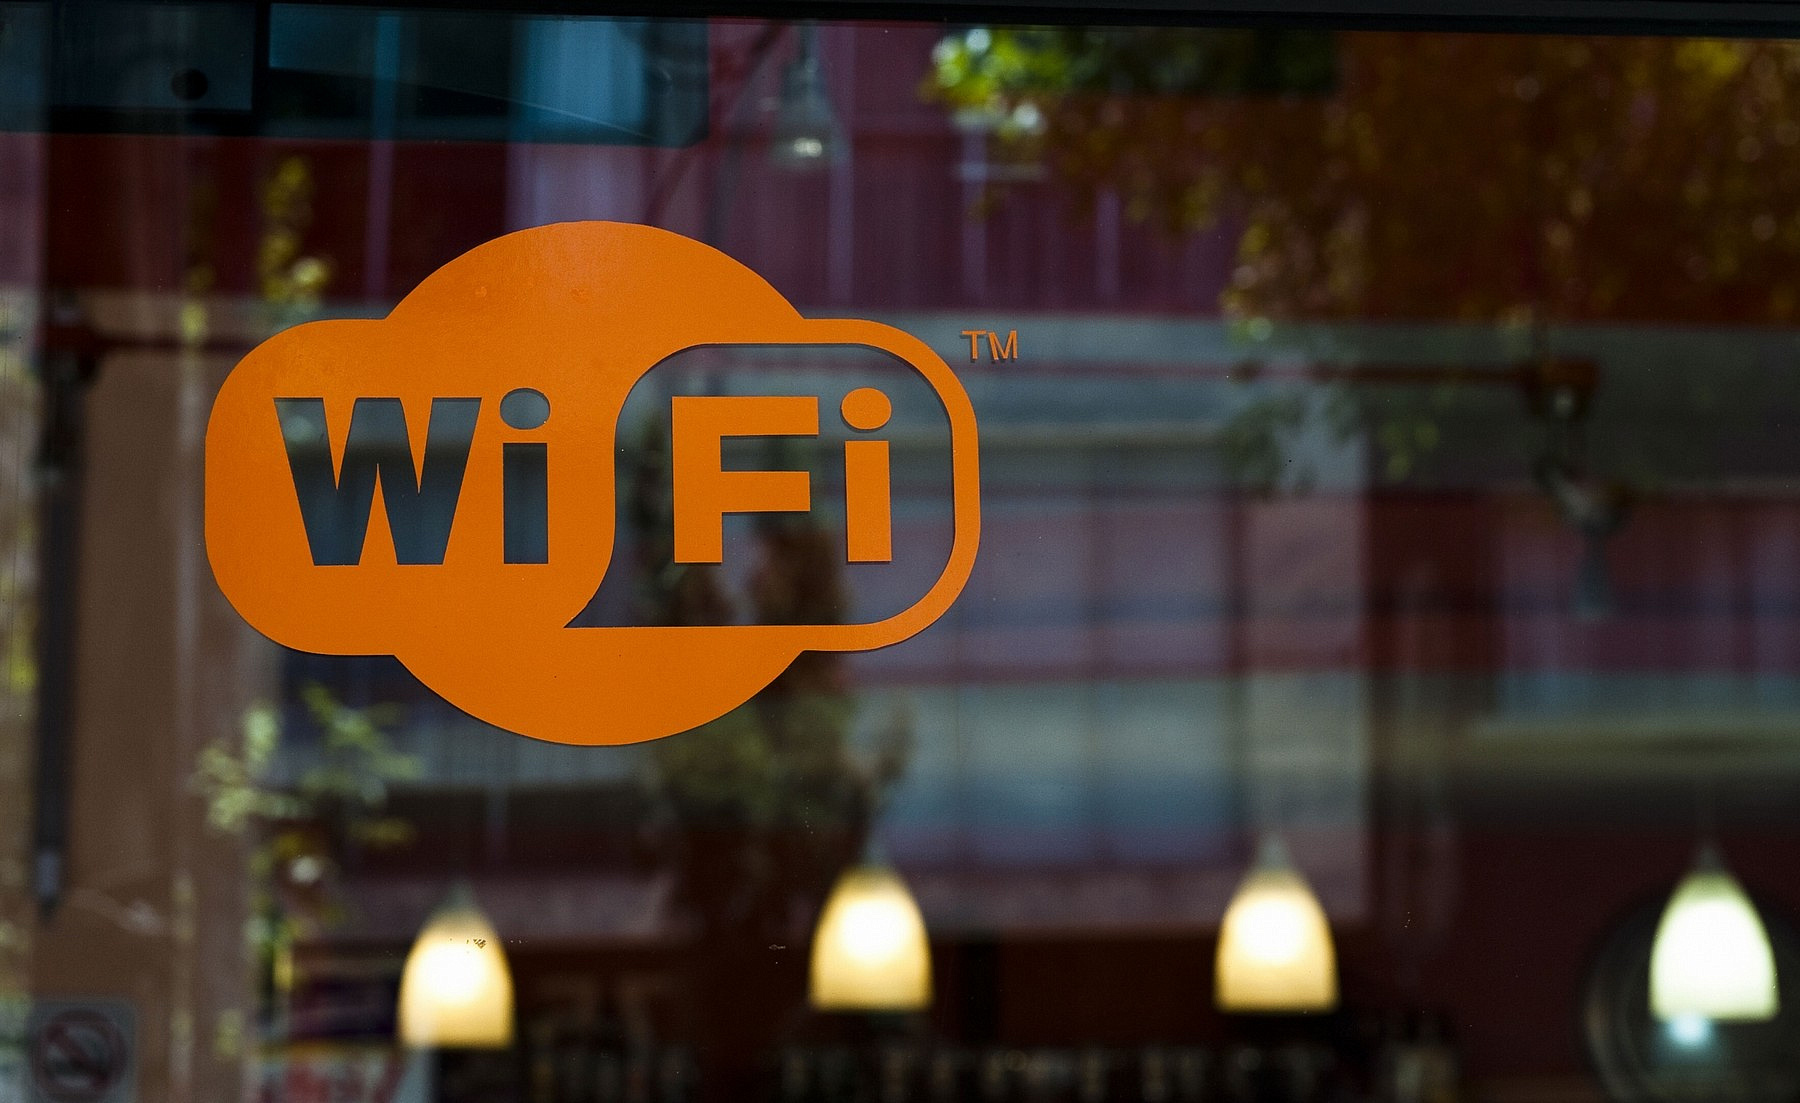      Wi-Fi